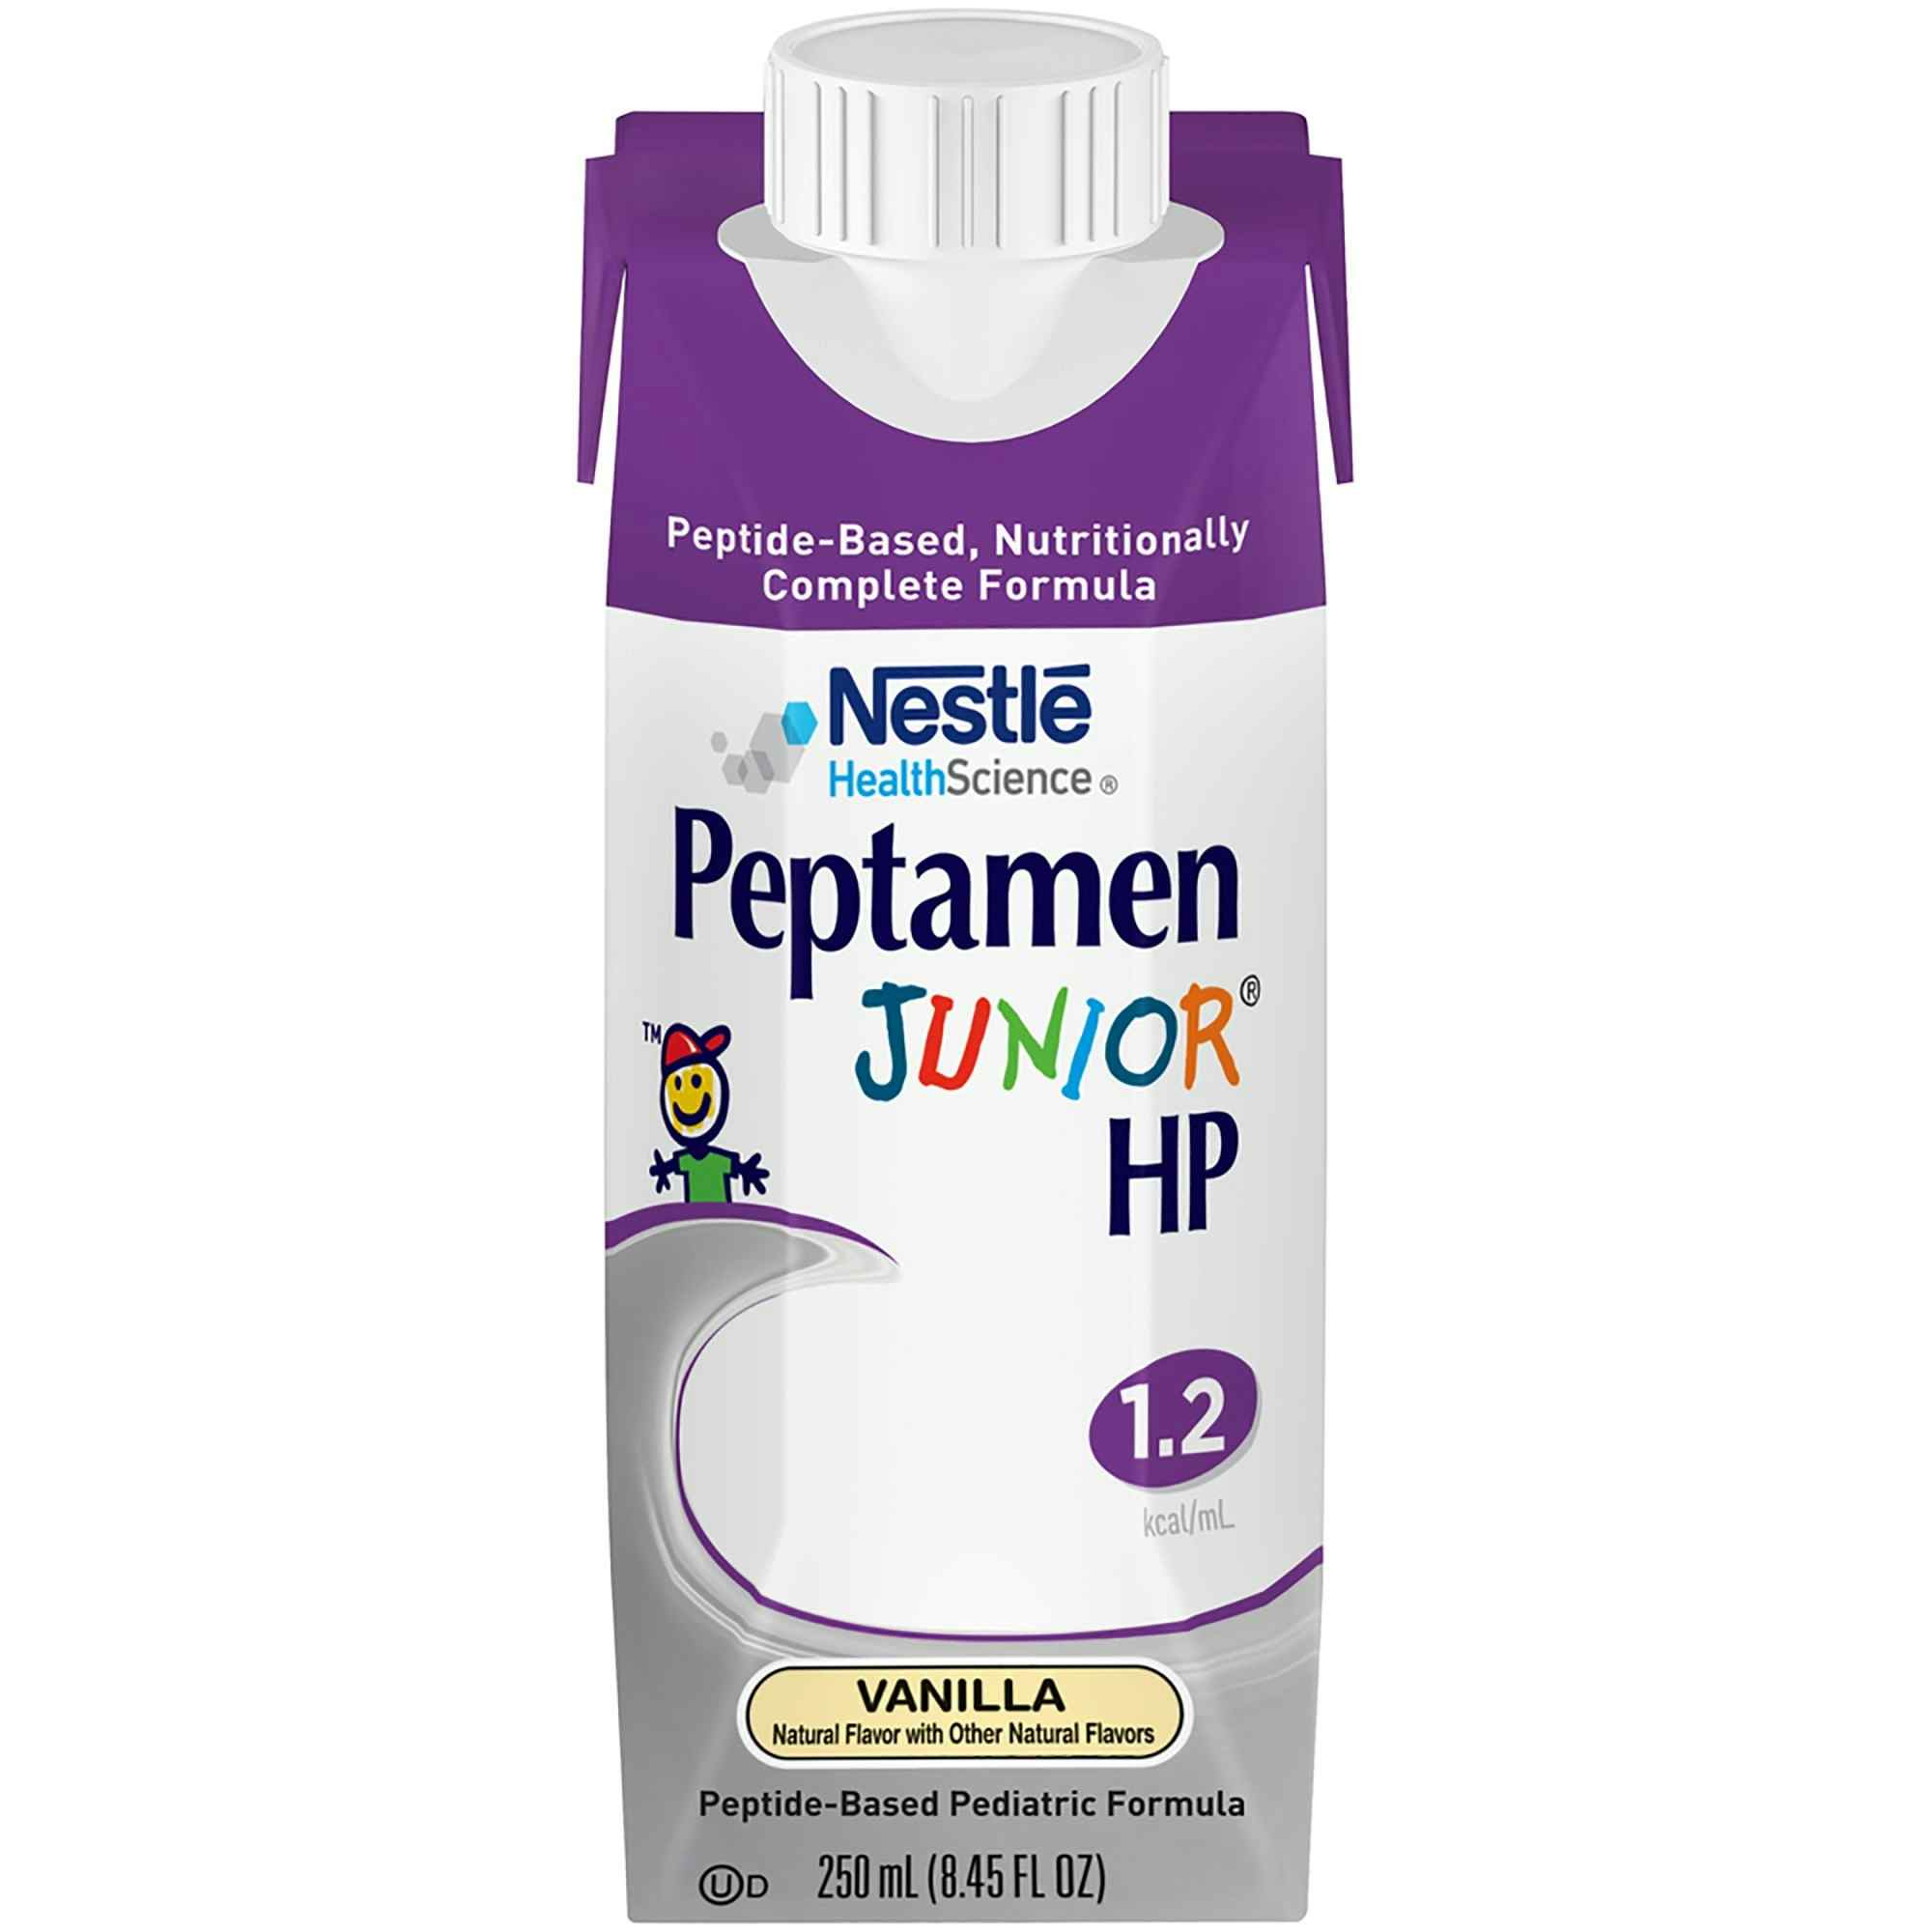 Nestle HealthScience Peptamen Junior HP Peptide-Based Nutritionally Complete Formula, Vanilla, 8.45 oz., 00043900544588, Case of 24